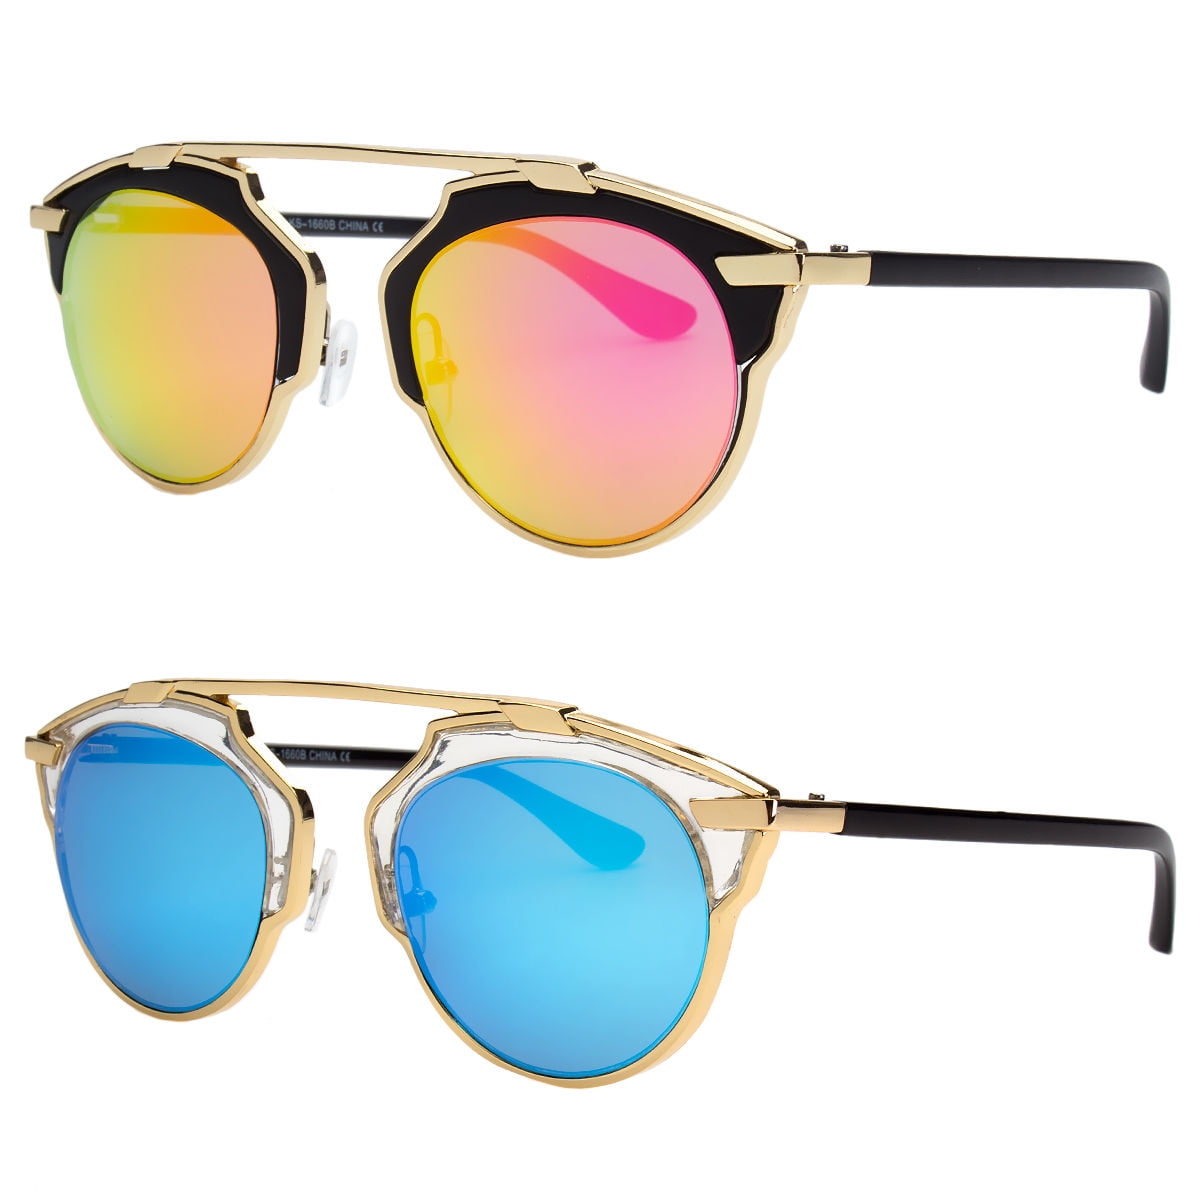 Cat Eye Women Fashion Sunglasses Gold Metal Rim Mirrored Lens Blue Black Pink